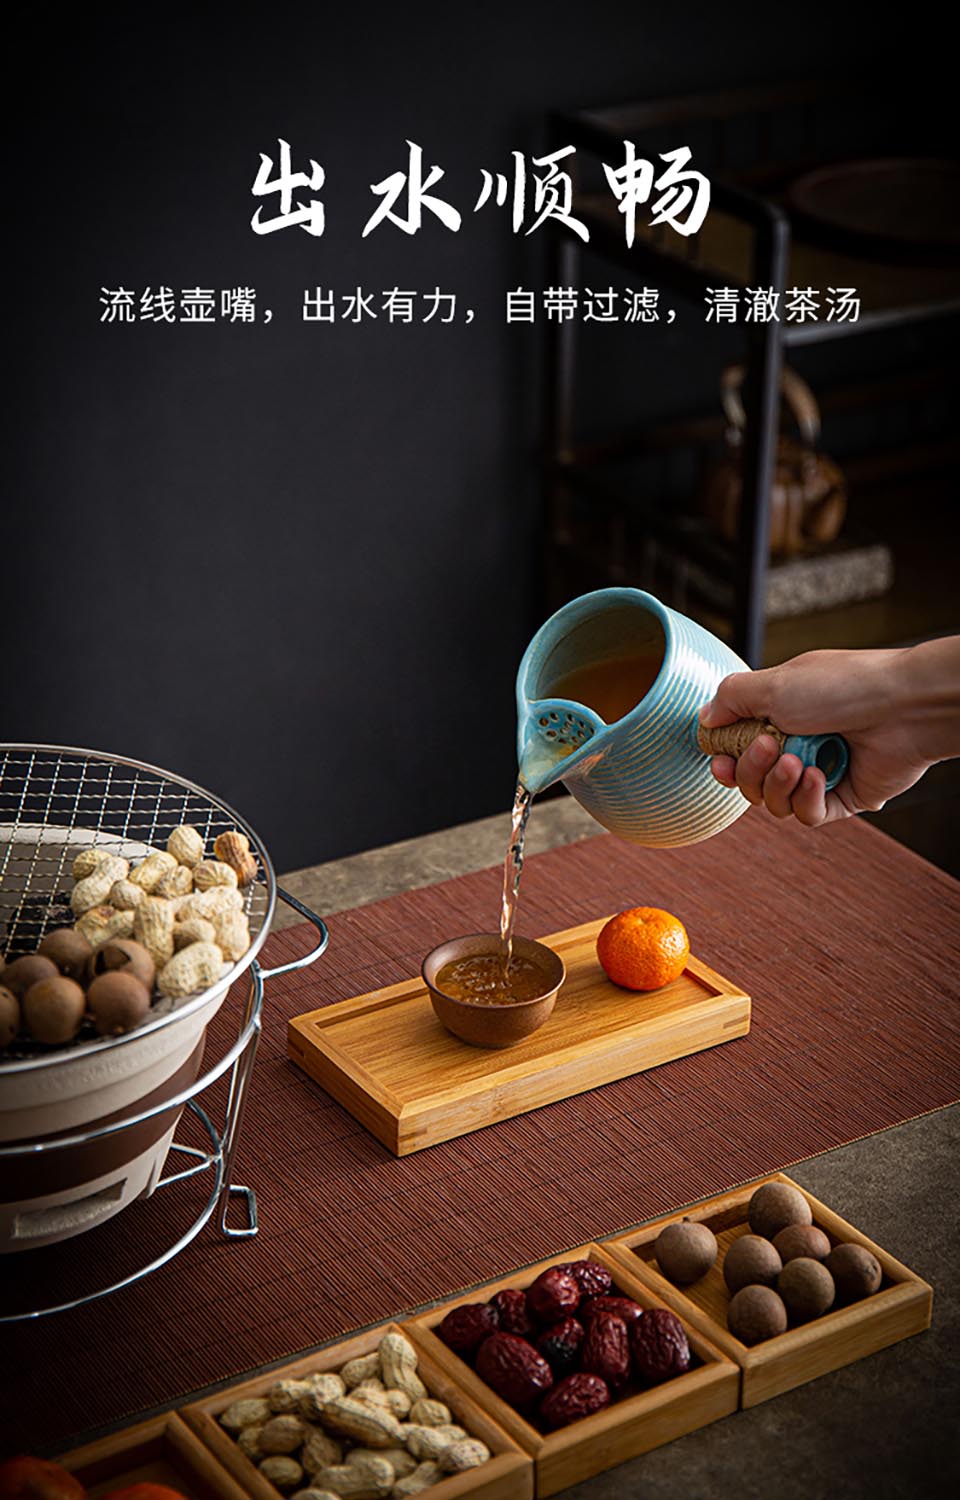 BOZZH 450ML Ceramic Carbon Furnace Tea Set Puer Kung Fu Tea Set Outdoor Potable Barbecue Charcoal Stove Tea Stove Ceramic Teapot